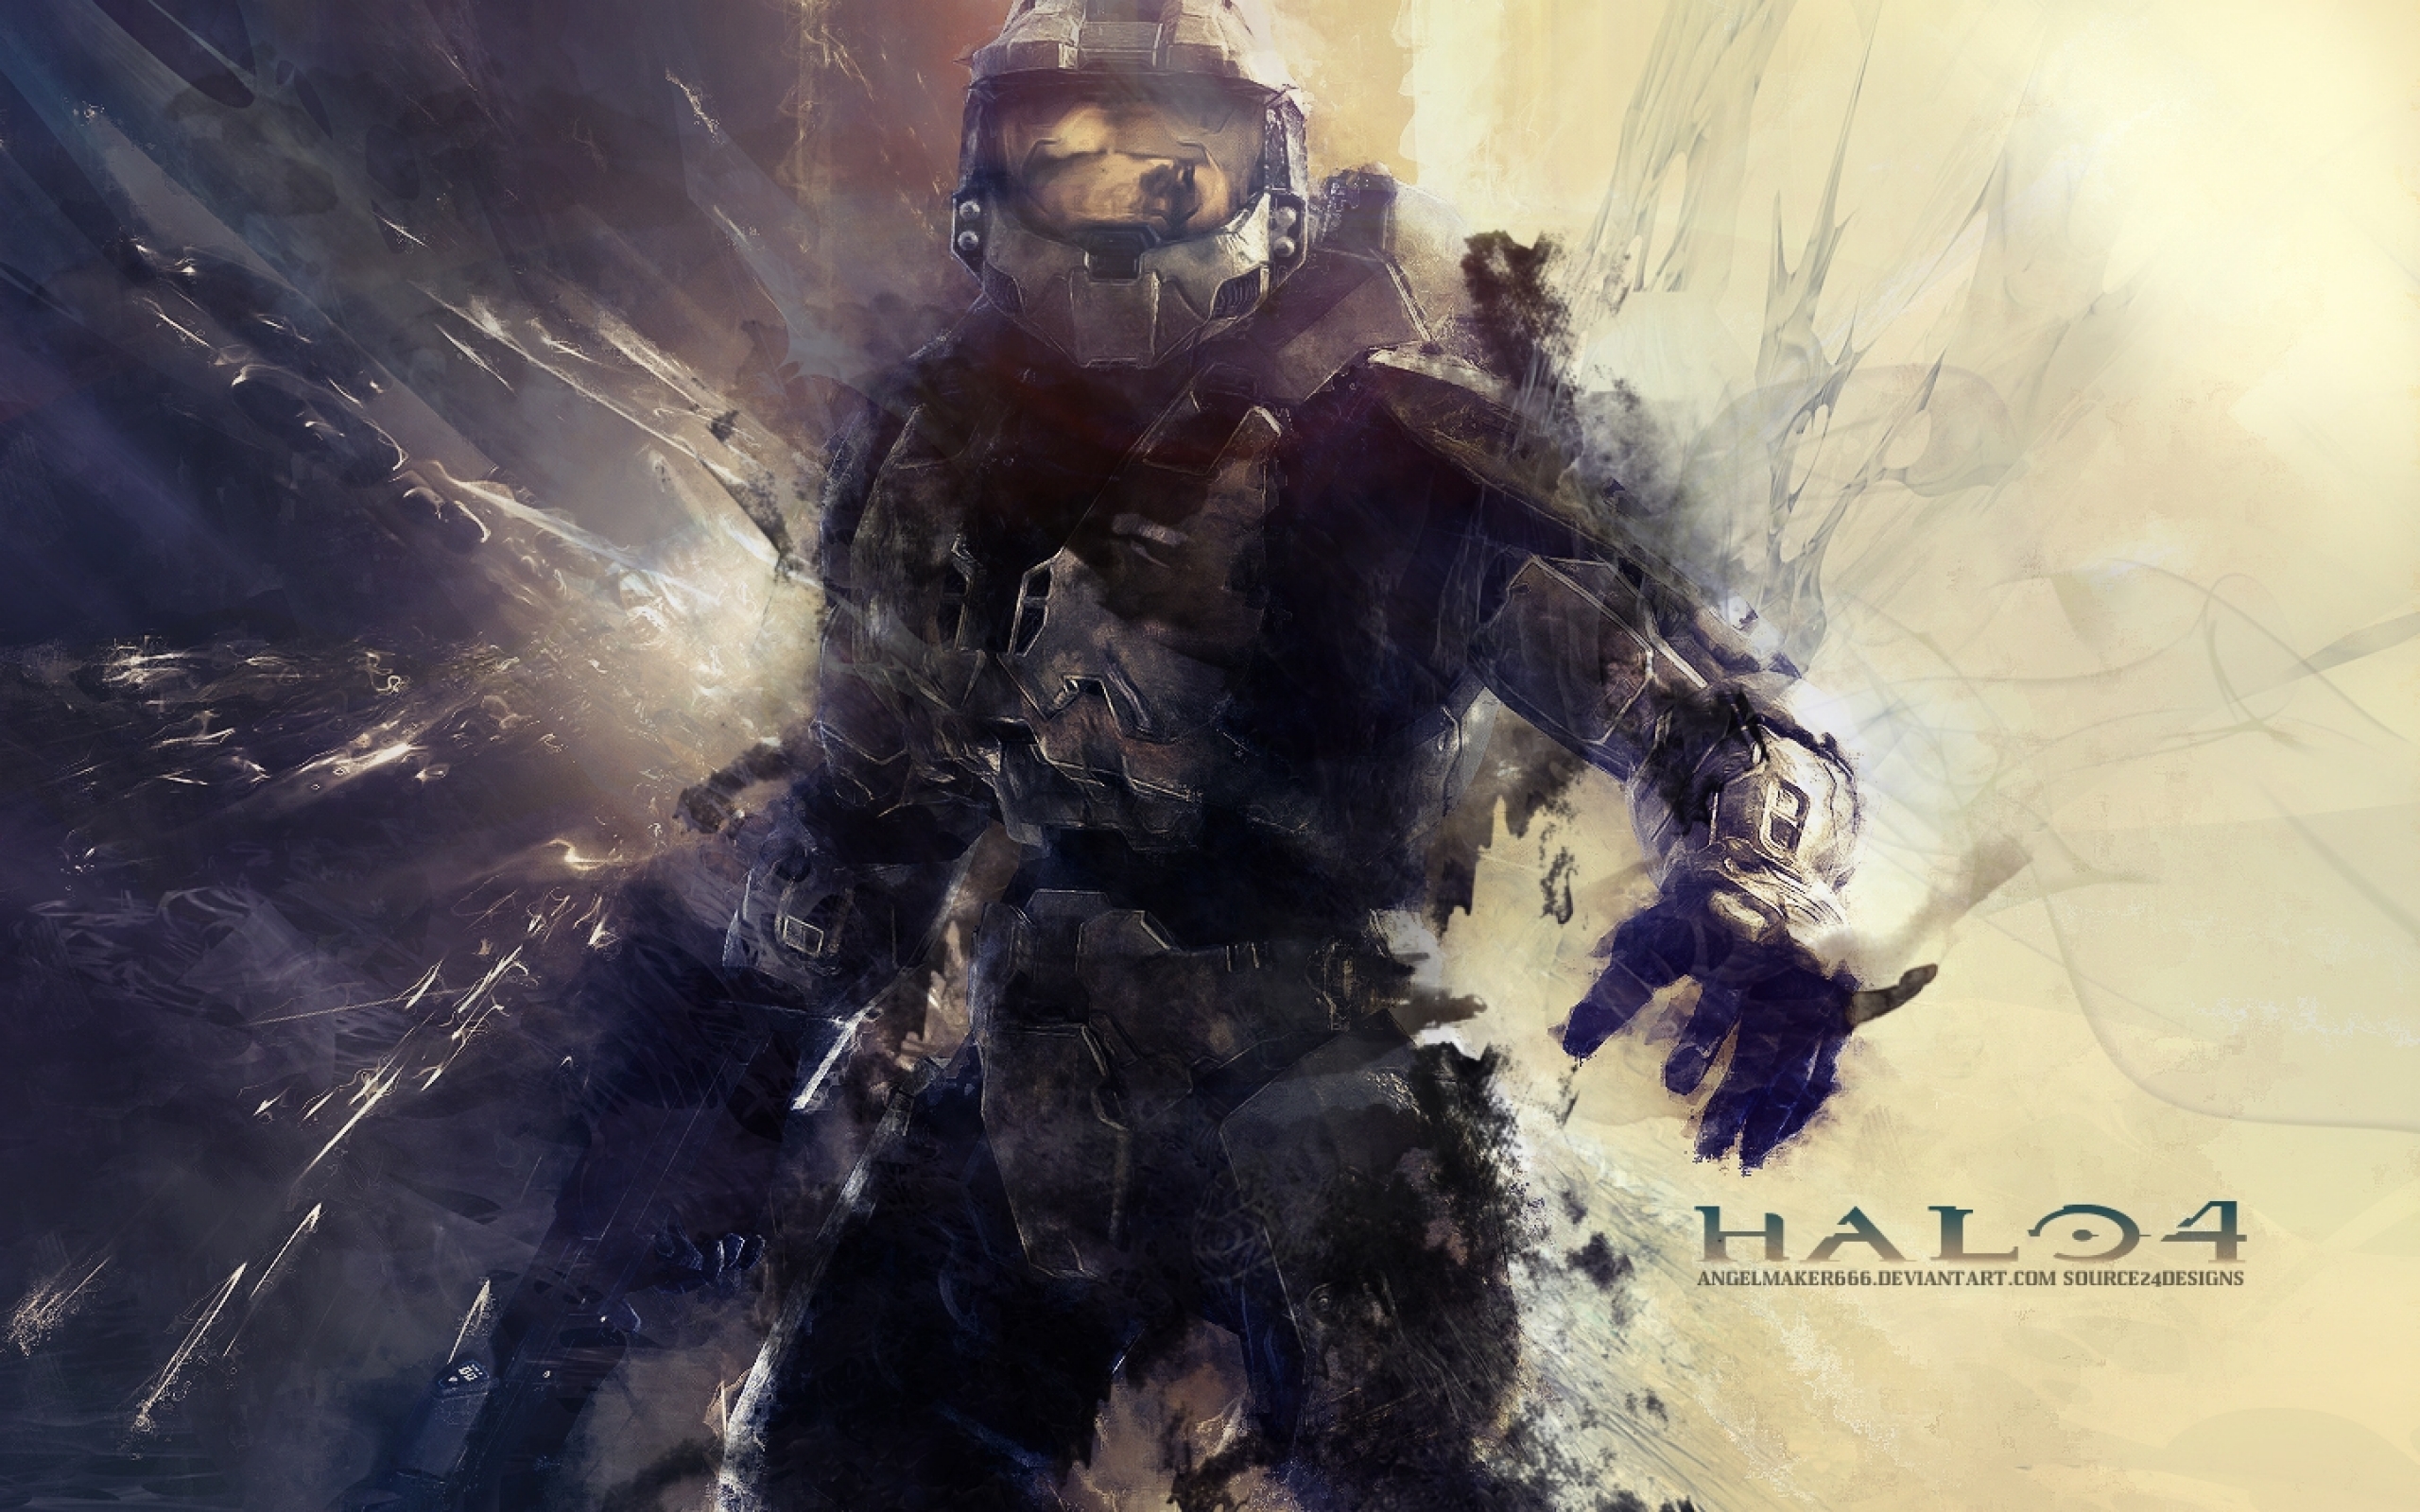 Cool Halo 4 Wallpaper 2560x1600 25407